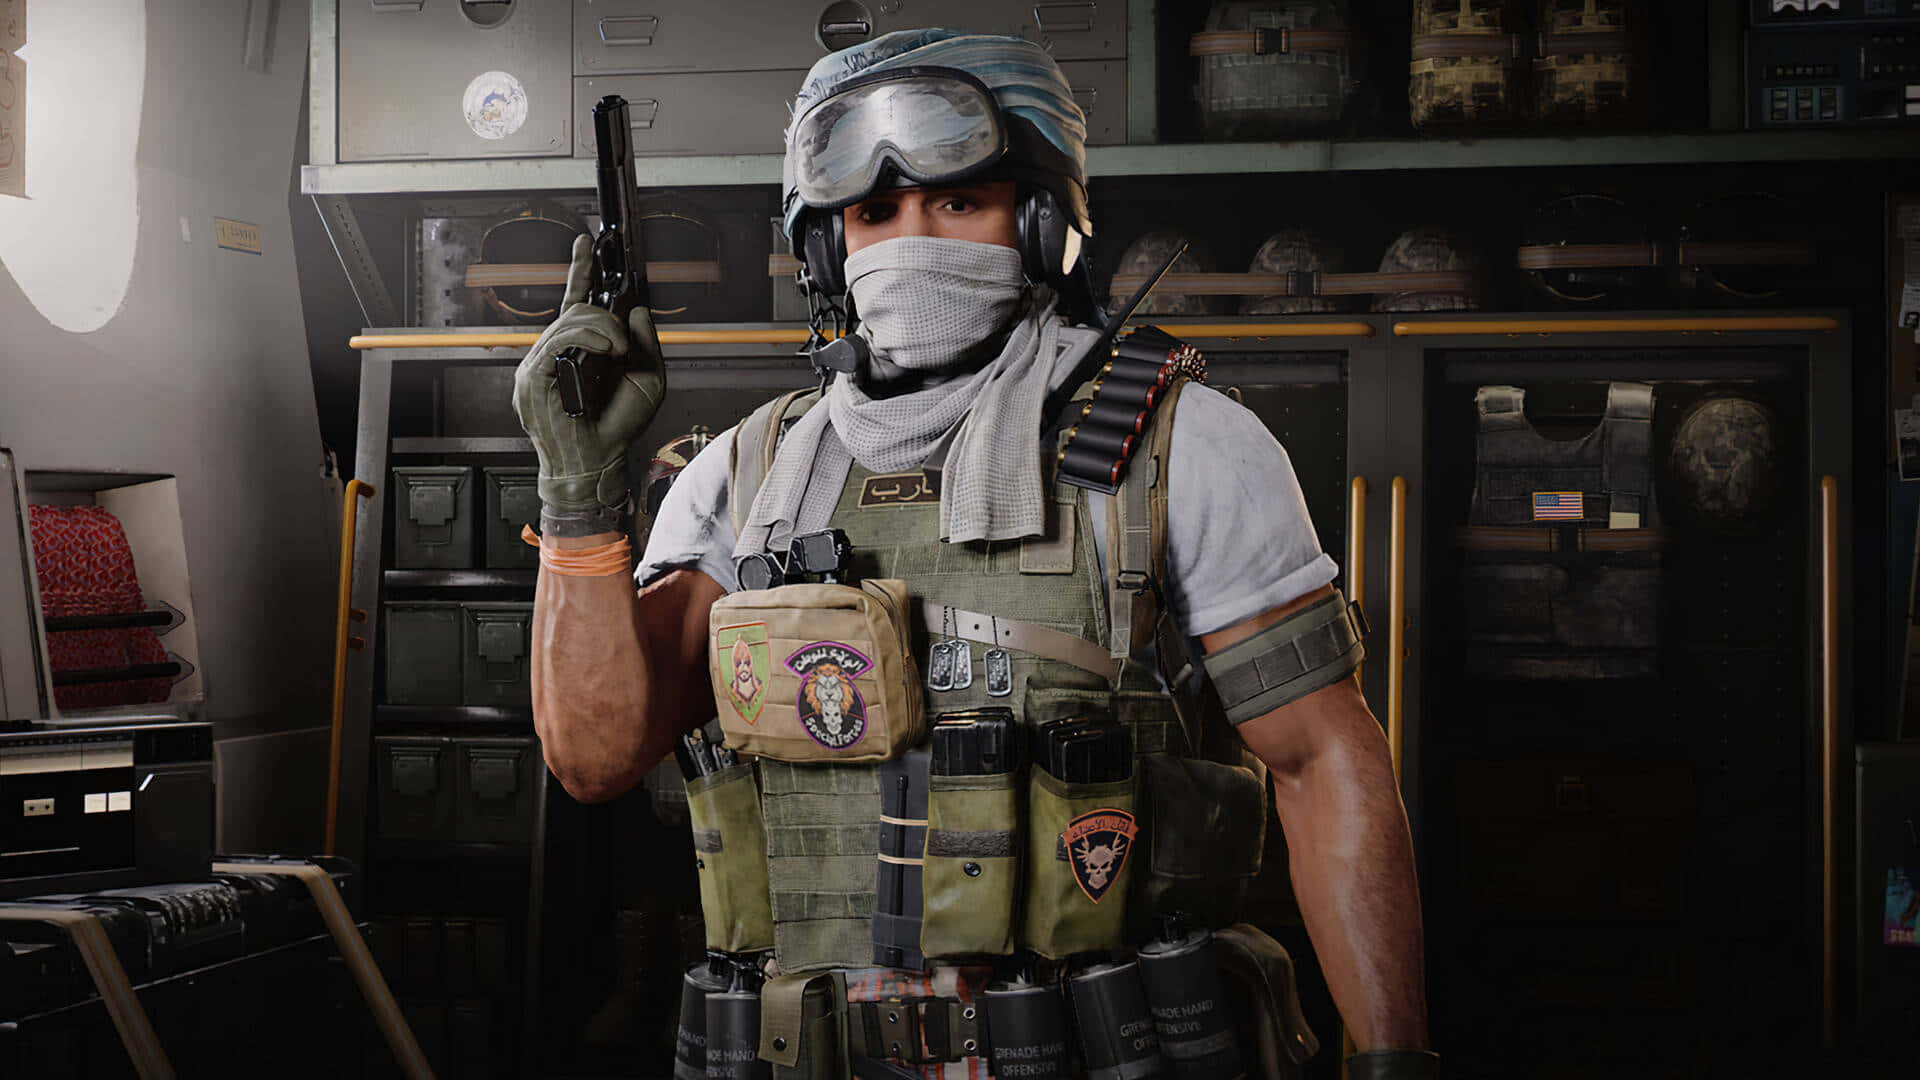 a man in a uniform holding a gun